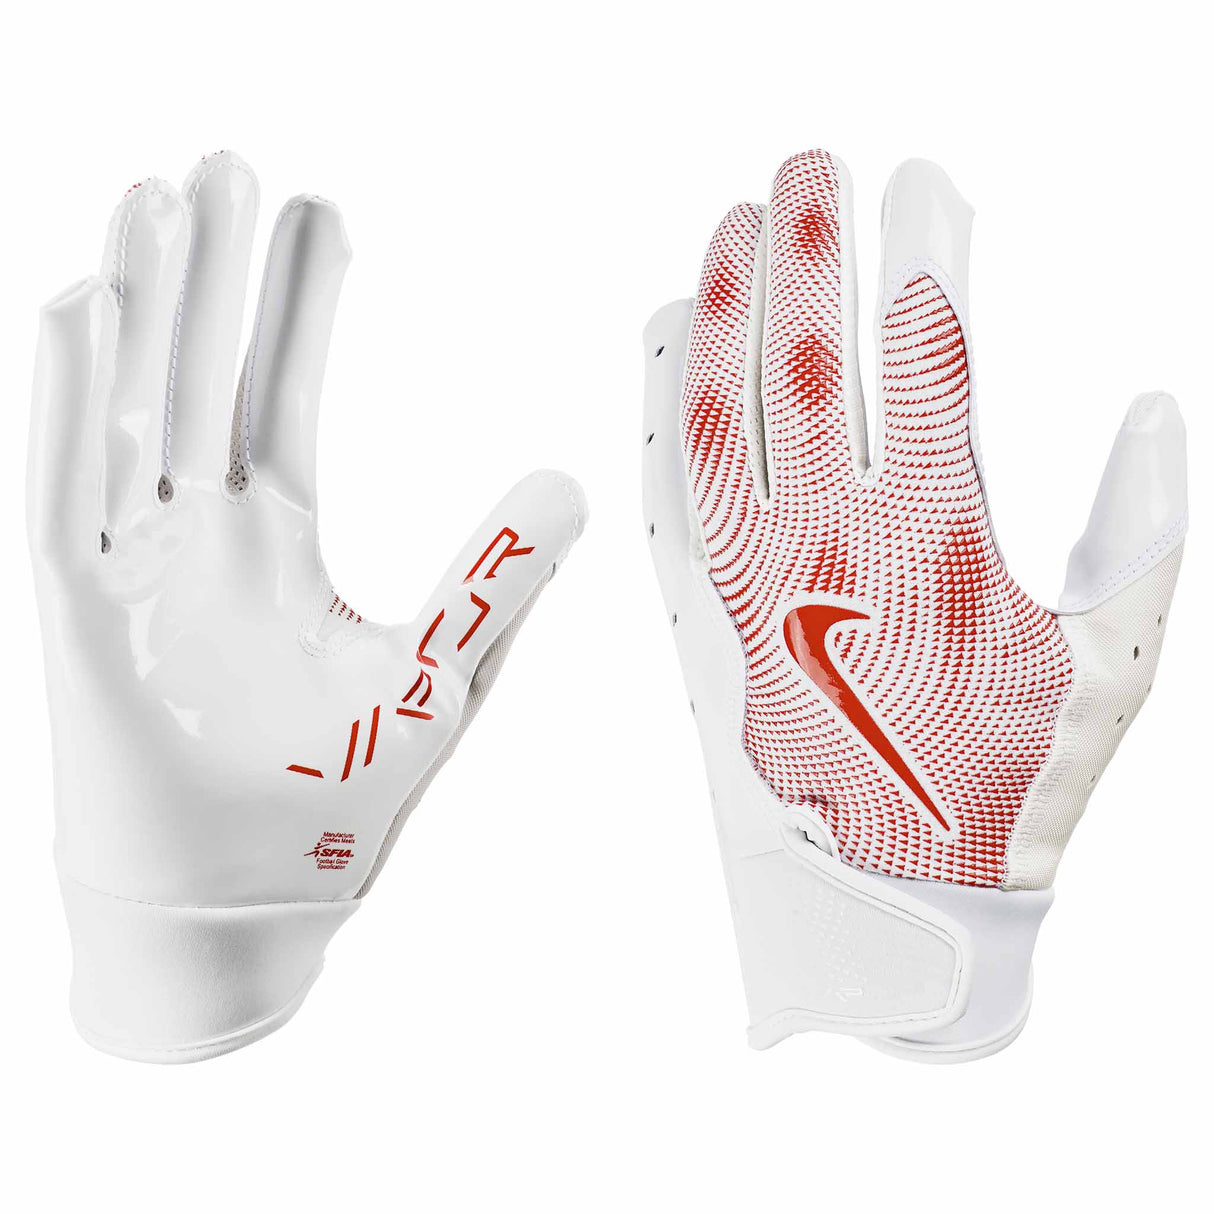 Nike Youth Vapor Jet 8.0 FG gants de football américain pour enfants - White / White / University Red